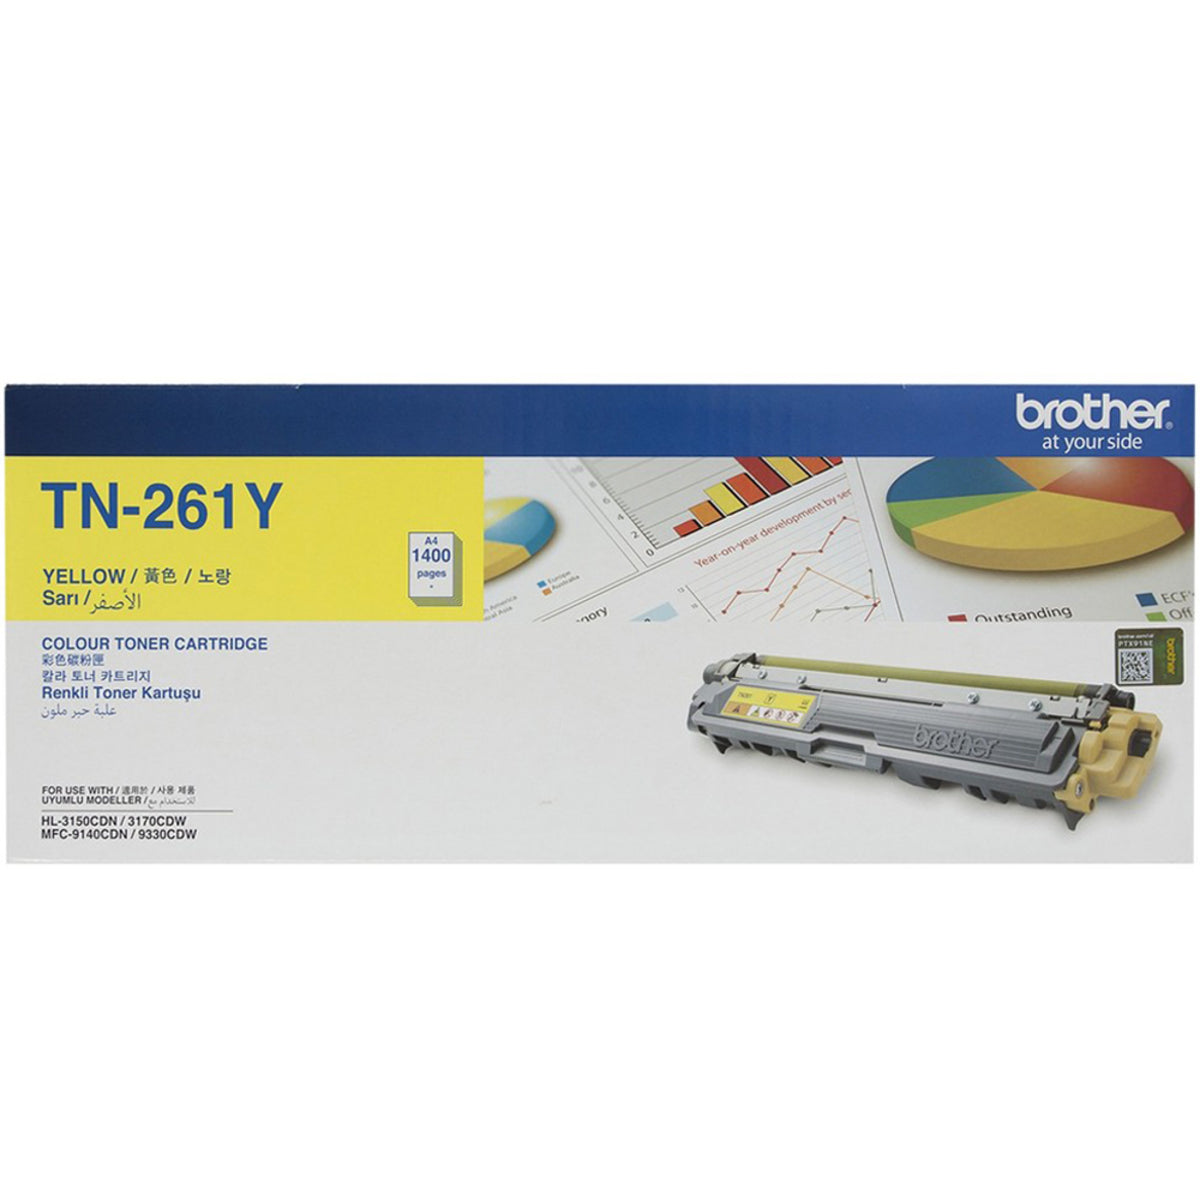 Brother TN-261 Toner Cartridge for HL-3150  HL-3170CDW  MFC-9330CDW Printers